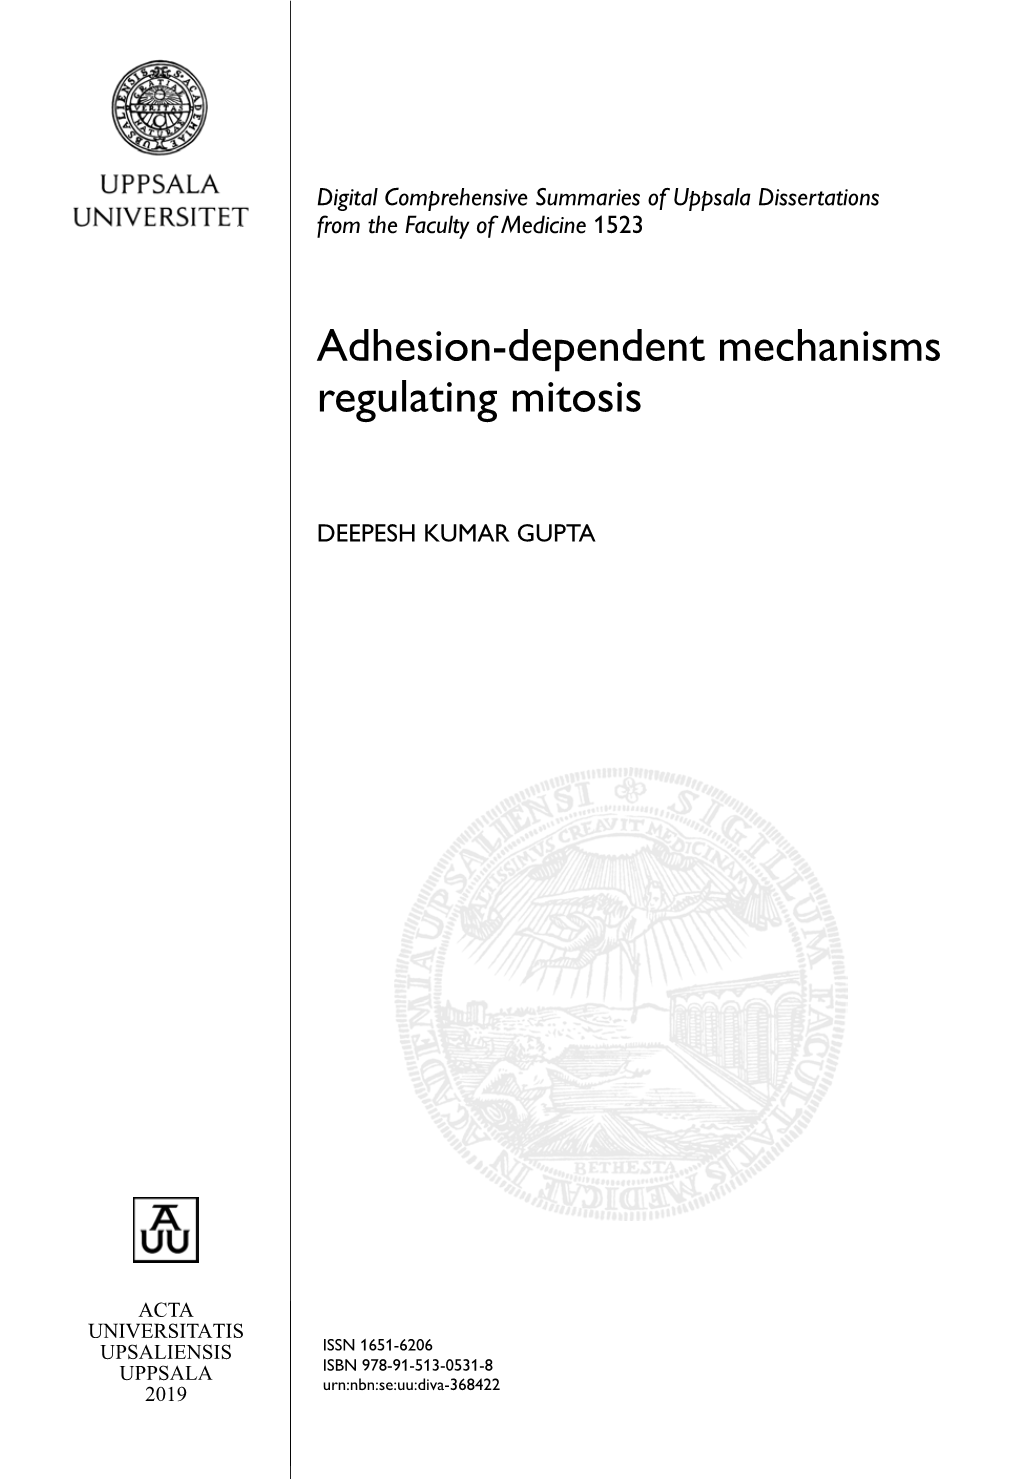 Adhesion-Dependent Mechanisms Regulating Mitosis